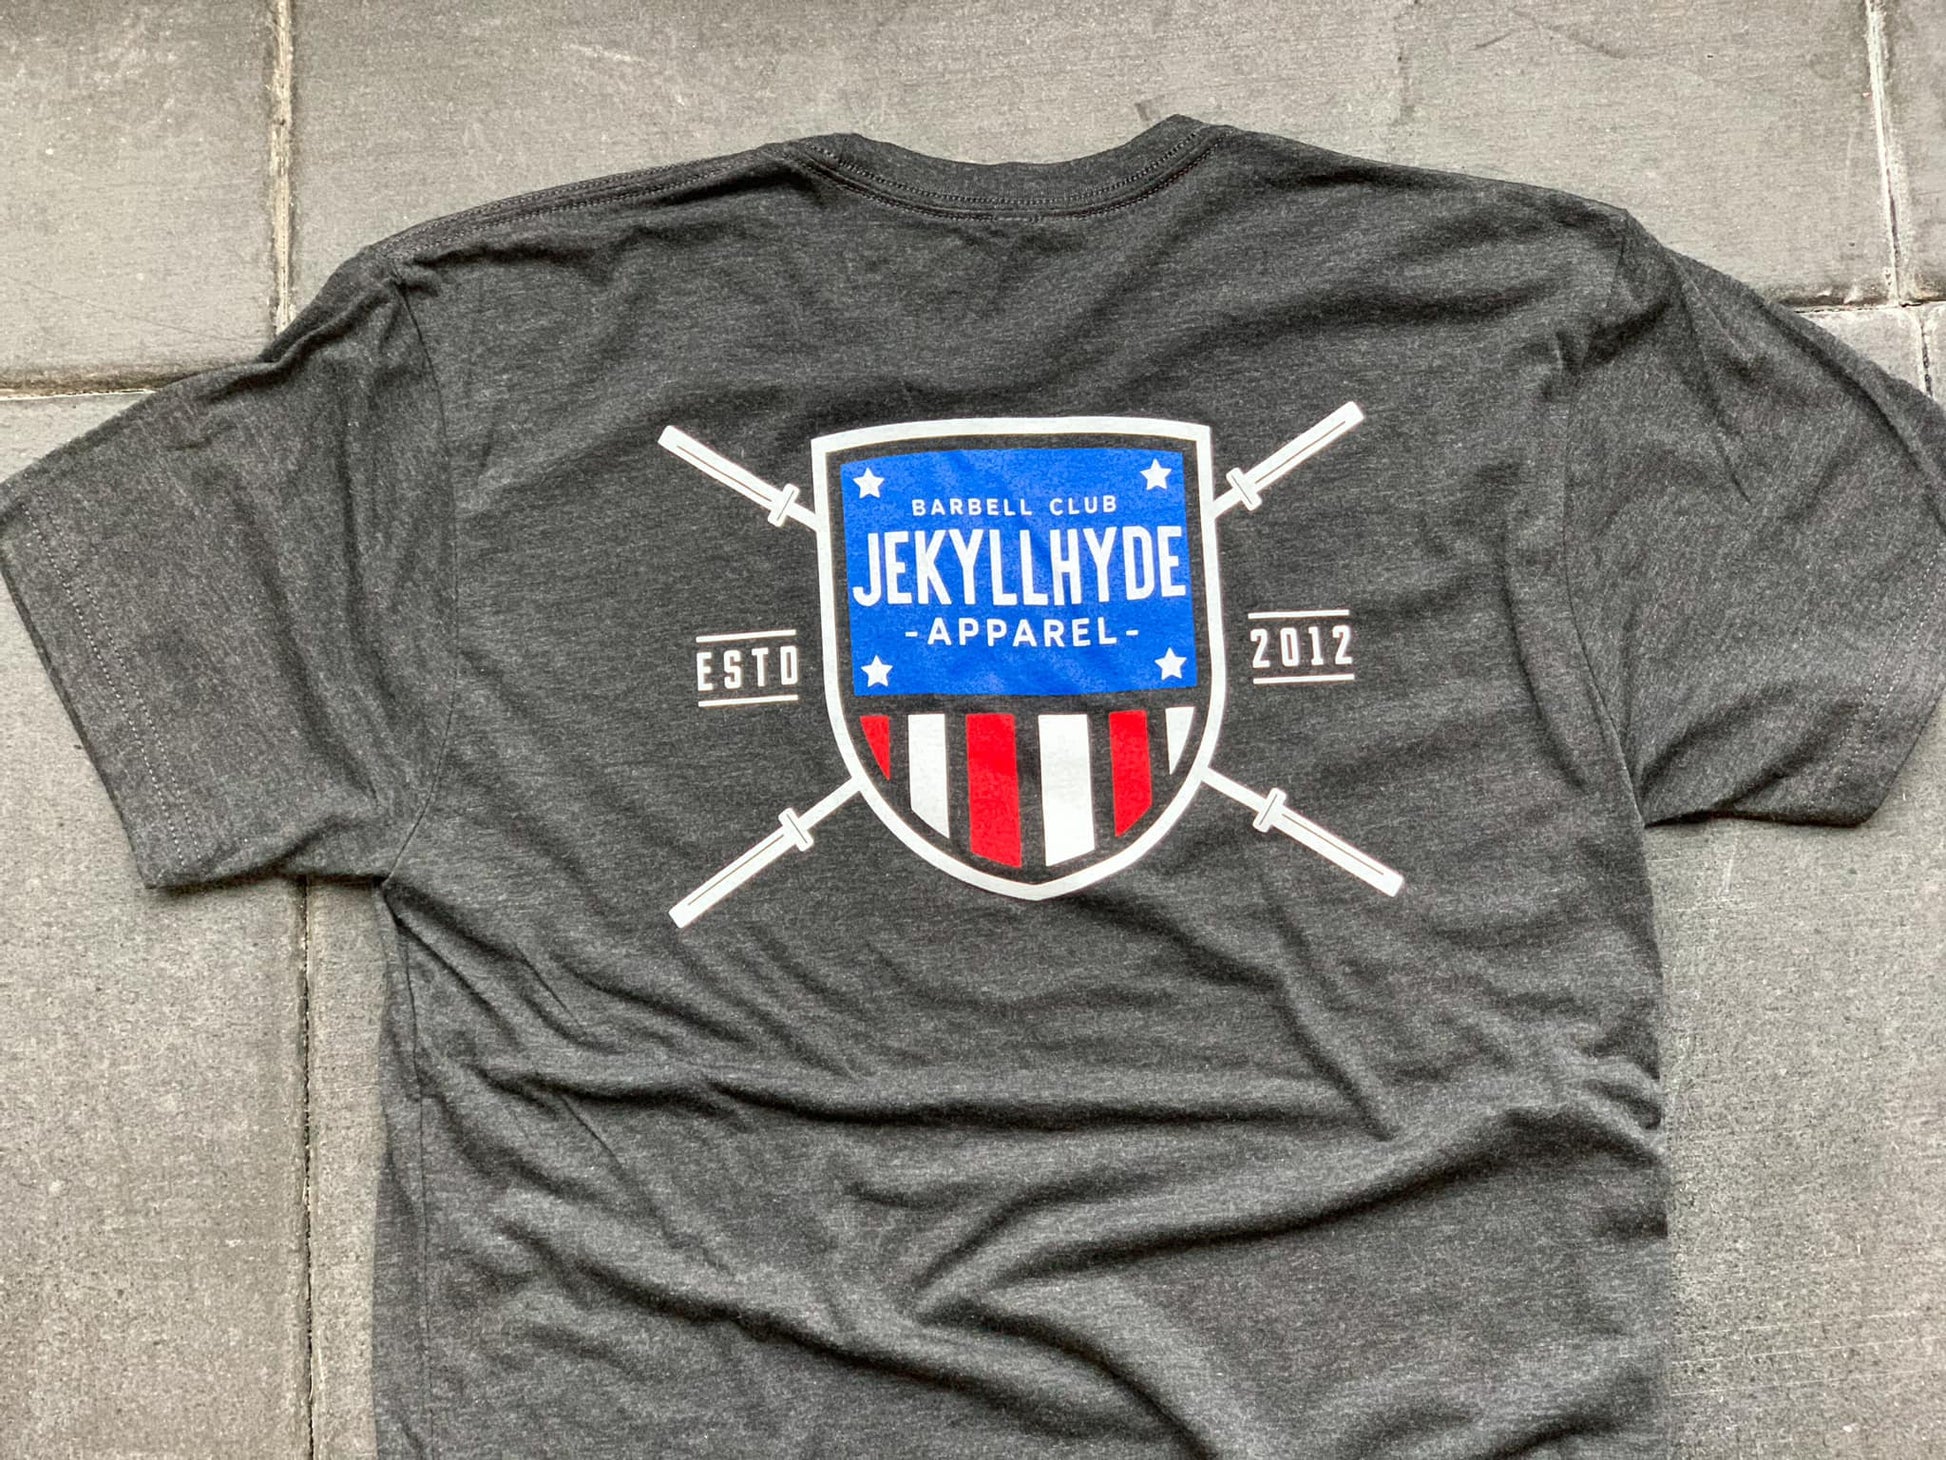 Jekyllhyde Apparel Barbell Club T-Shirt Small